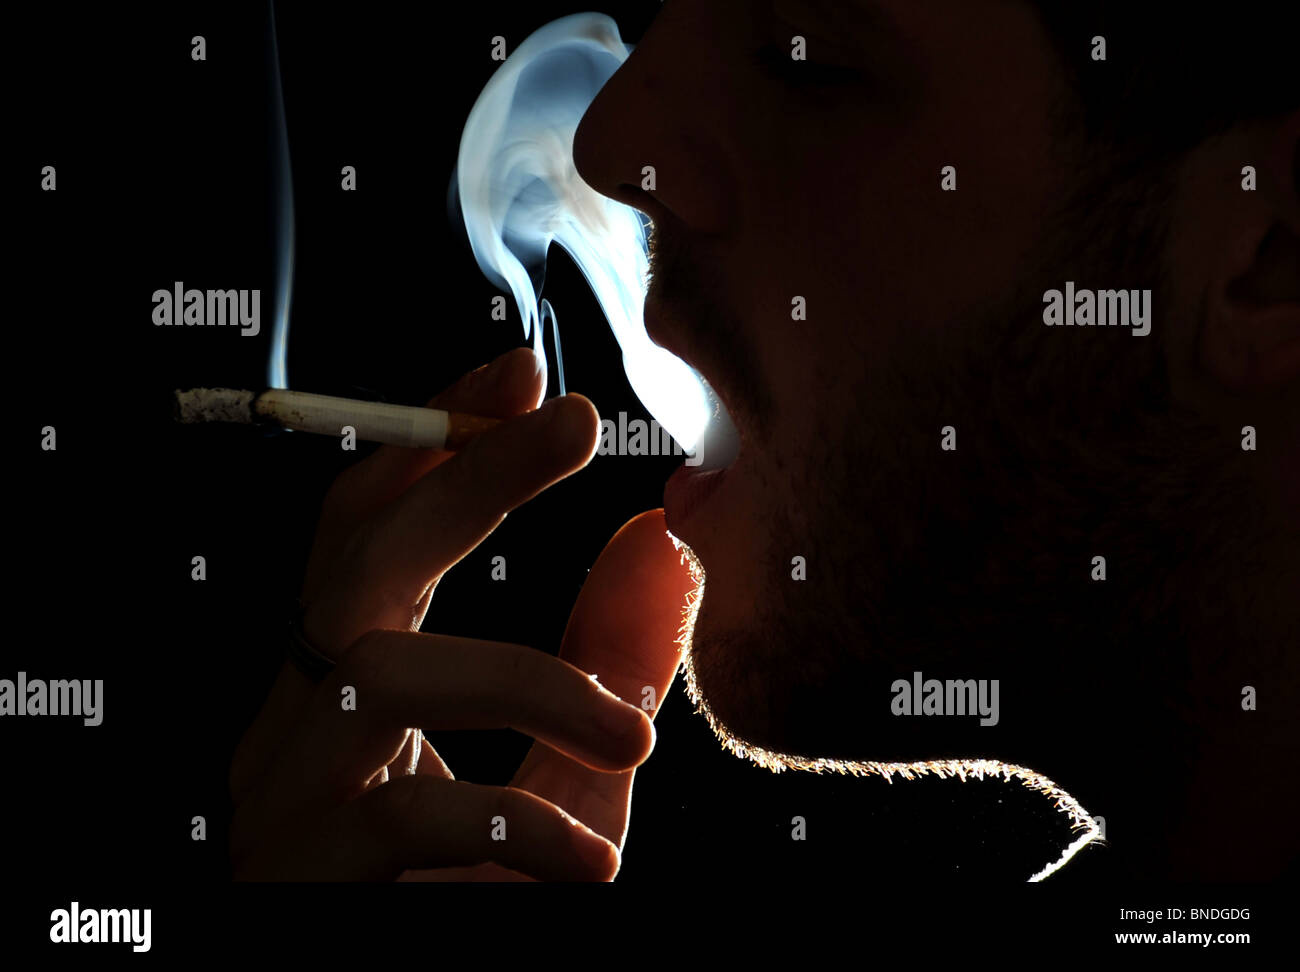 A man smoking a cigarette Stock Photo